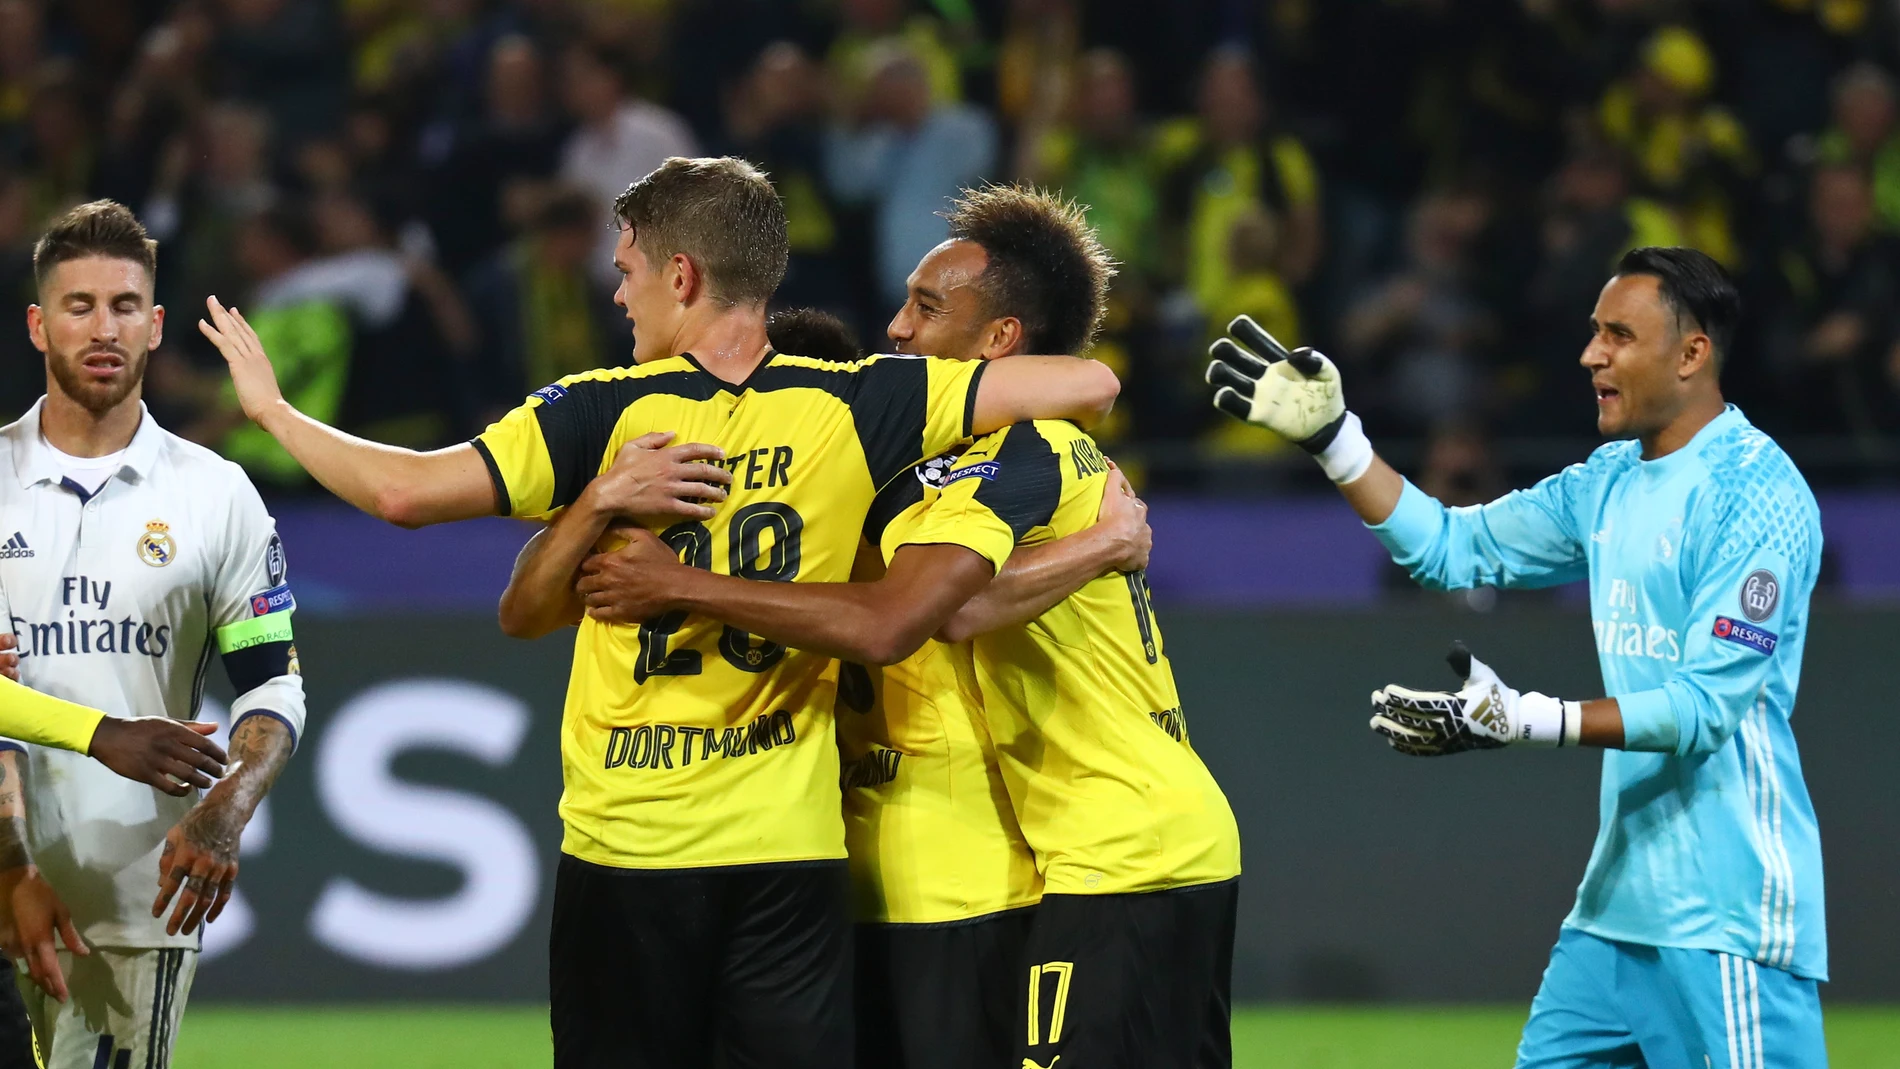 El Dortmund, celebra el empate al Real Madrid